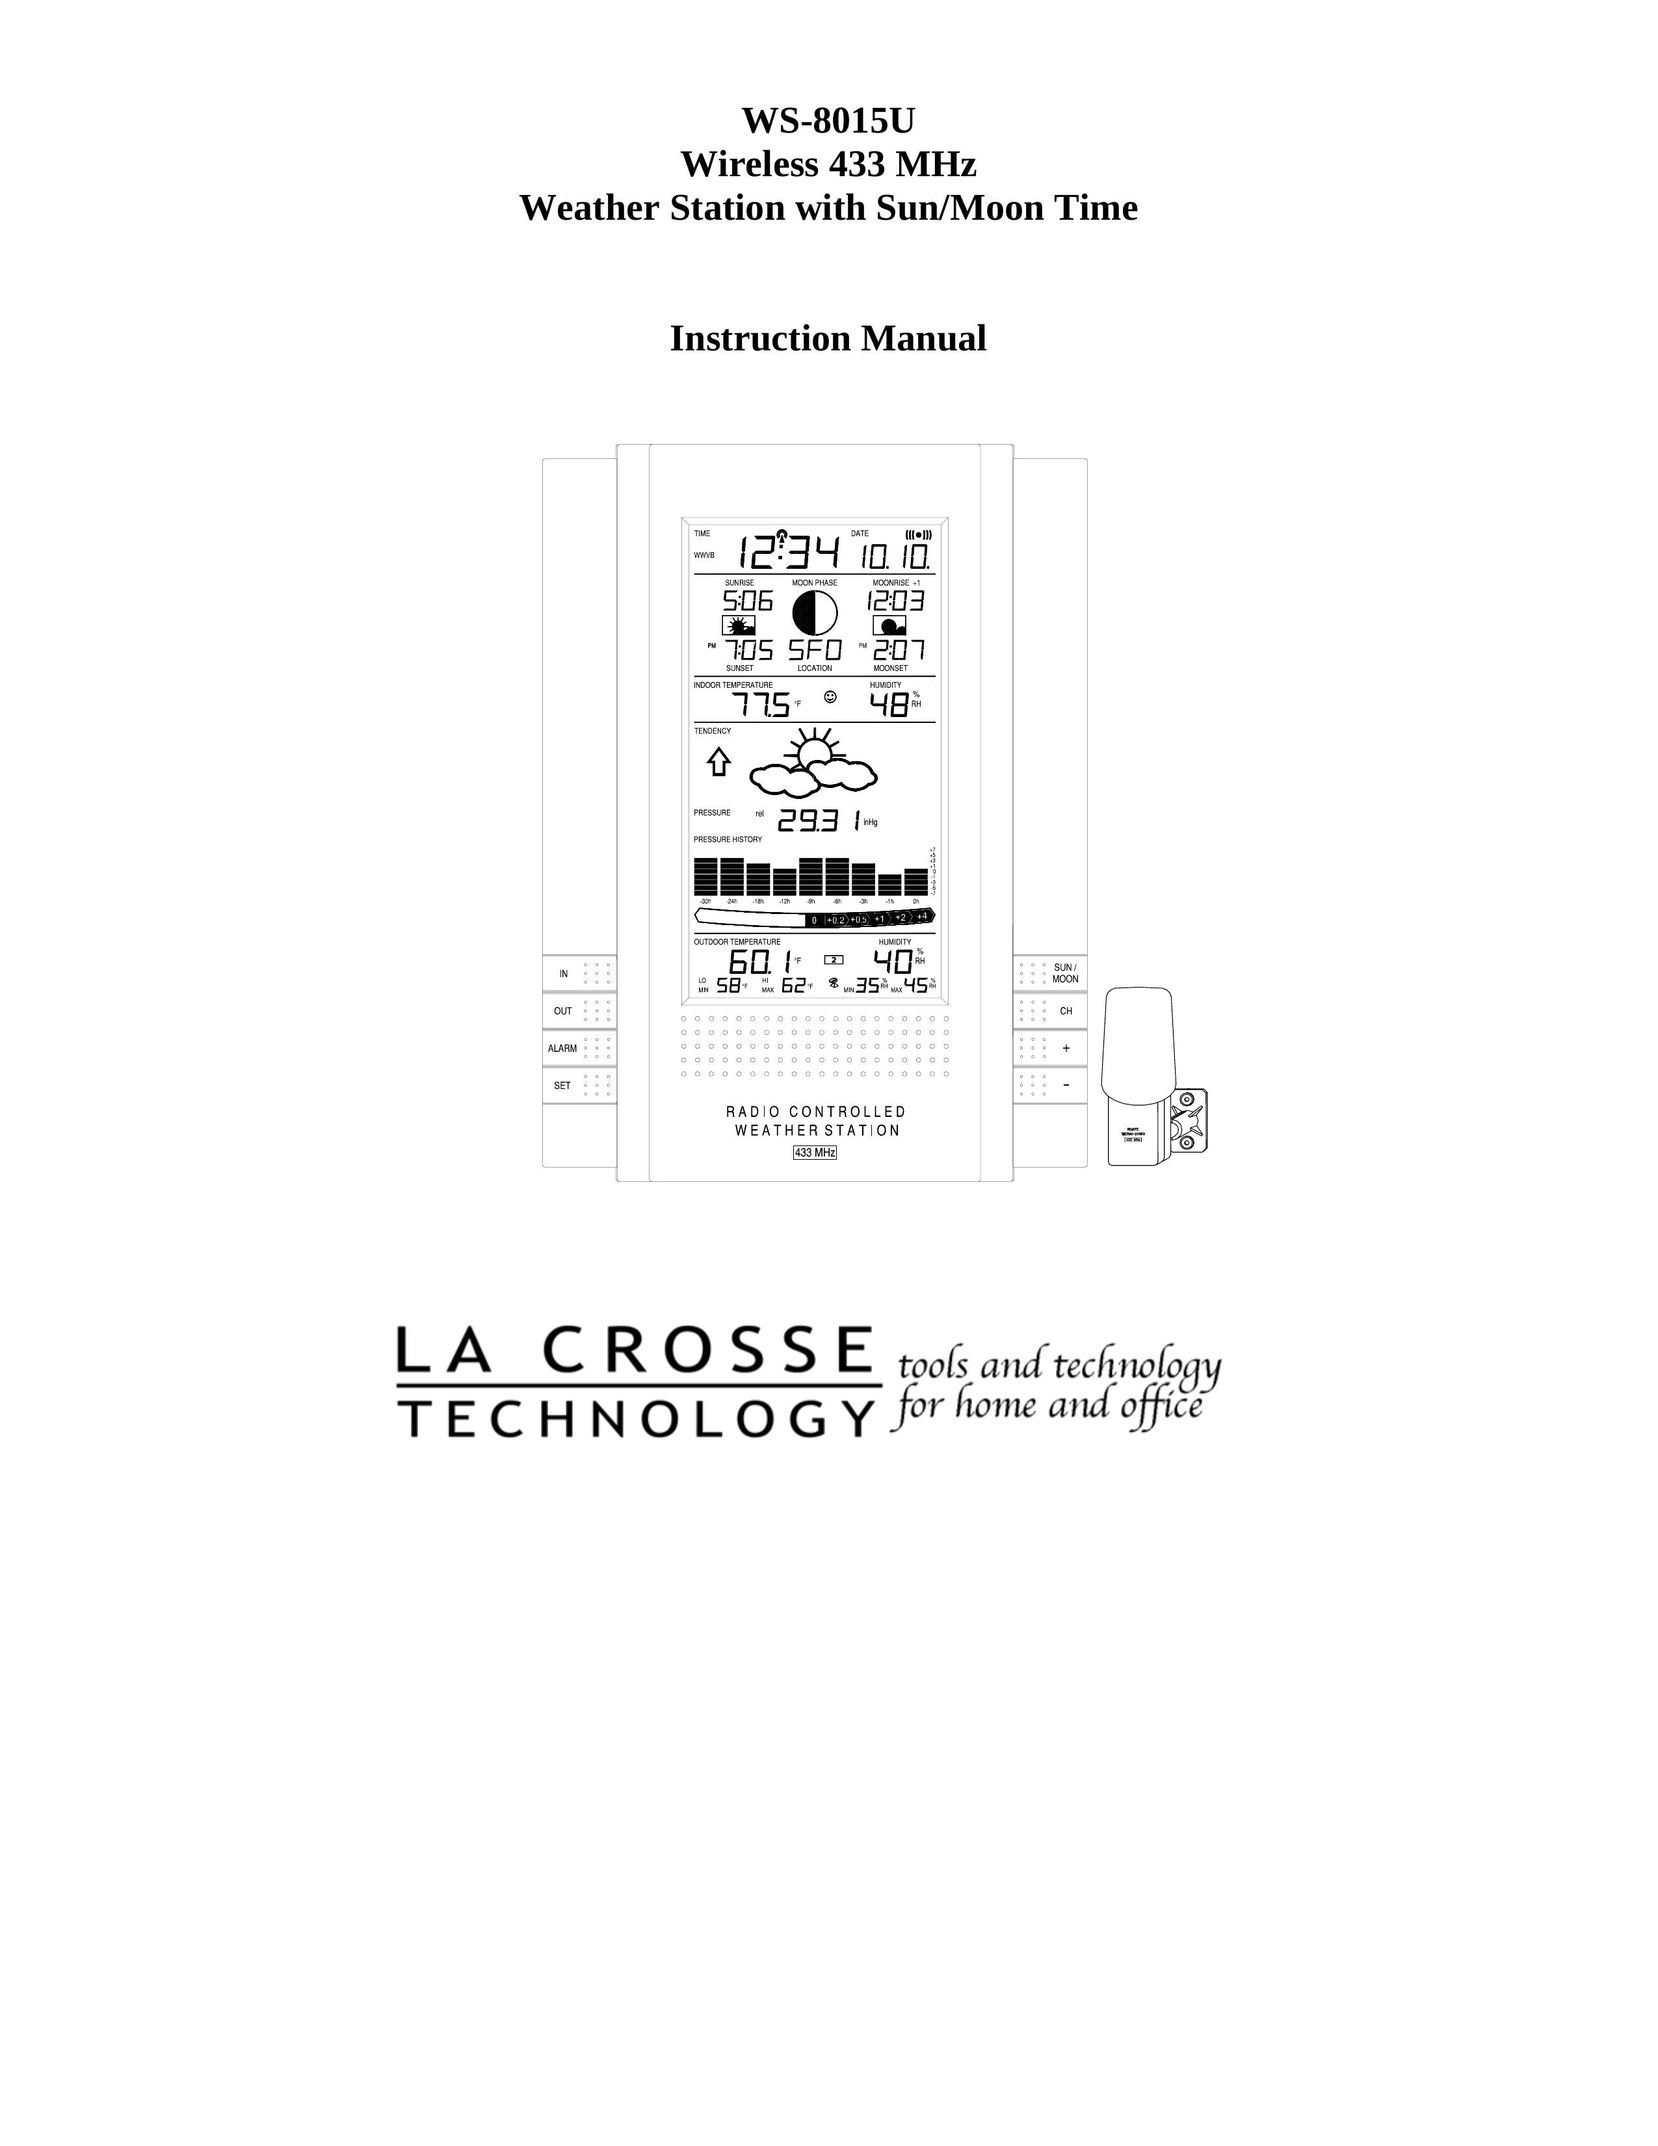 La Crosse Technology WS-8015U Carbon Monoxide Alarm User Manual